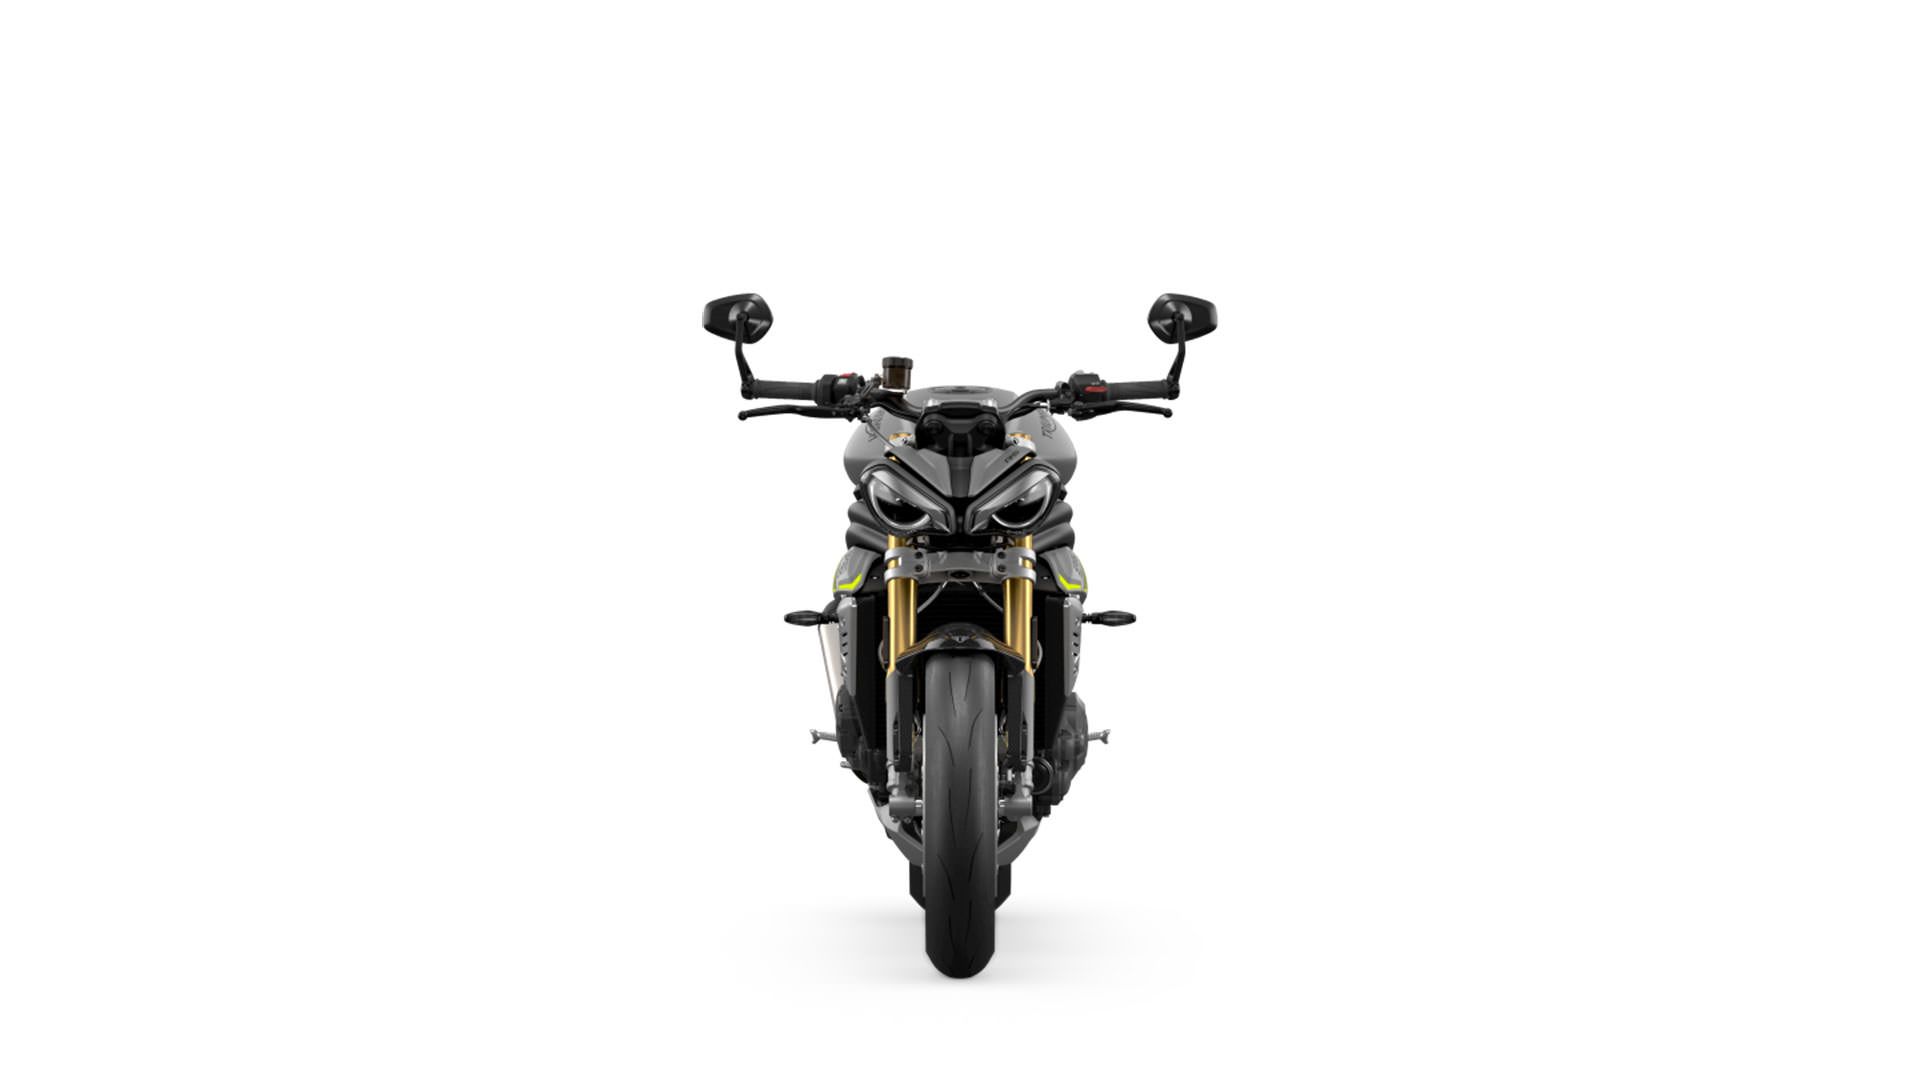 نمای جلو موتورسیکلت تریومف اسپید تریپل 1200 آر اس / Triumph Speed Triple 1200 RS 2021 Motorcycle